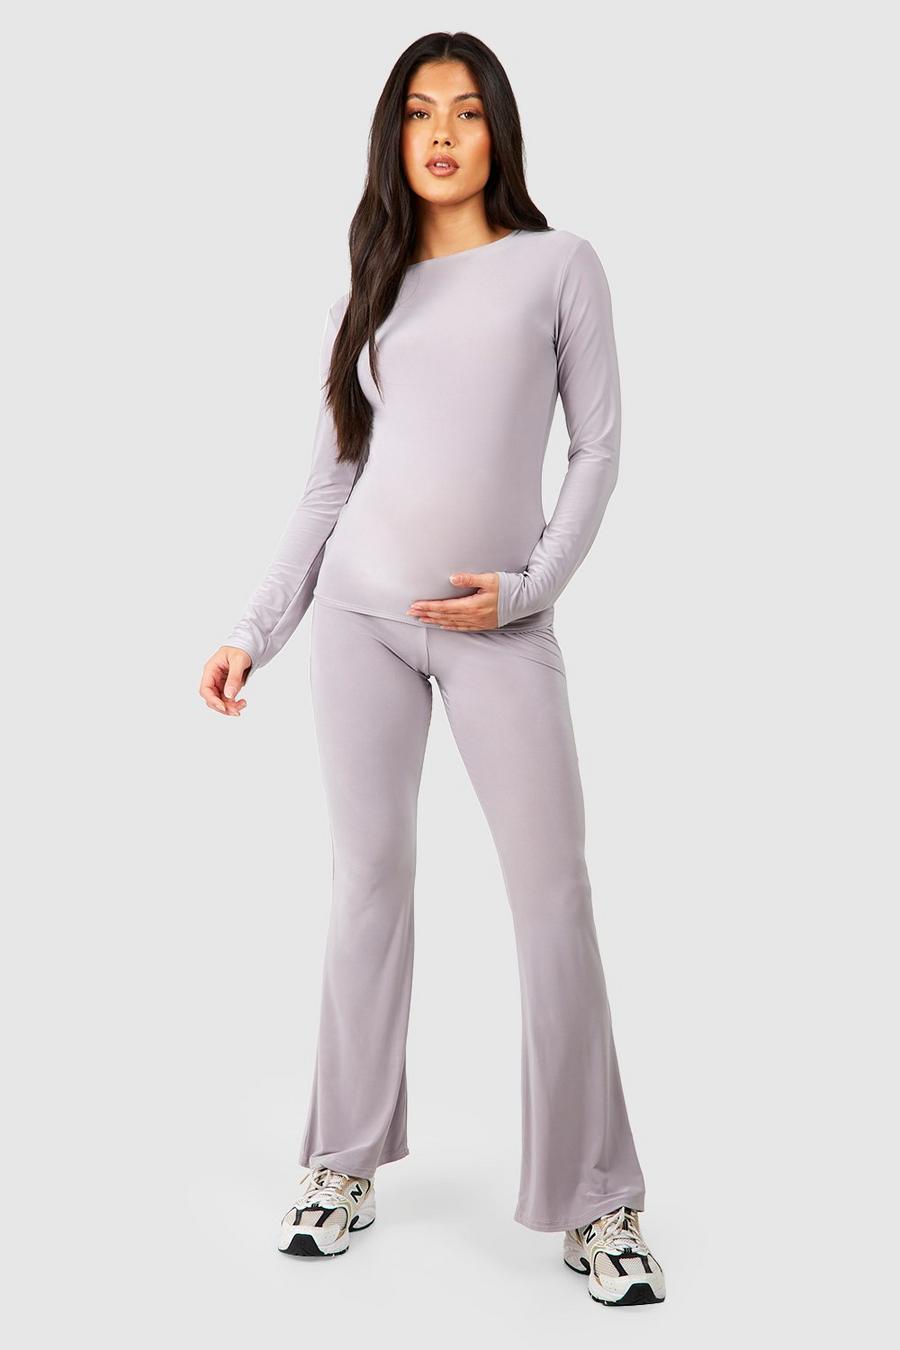 Grey marl grau Maternity Soft Touch Yoga Pant Loungewear Set